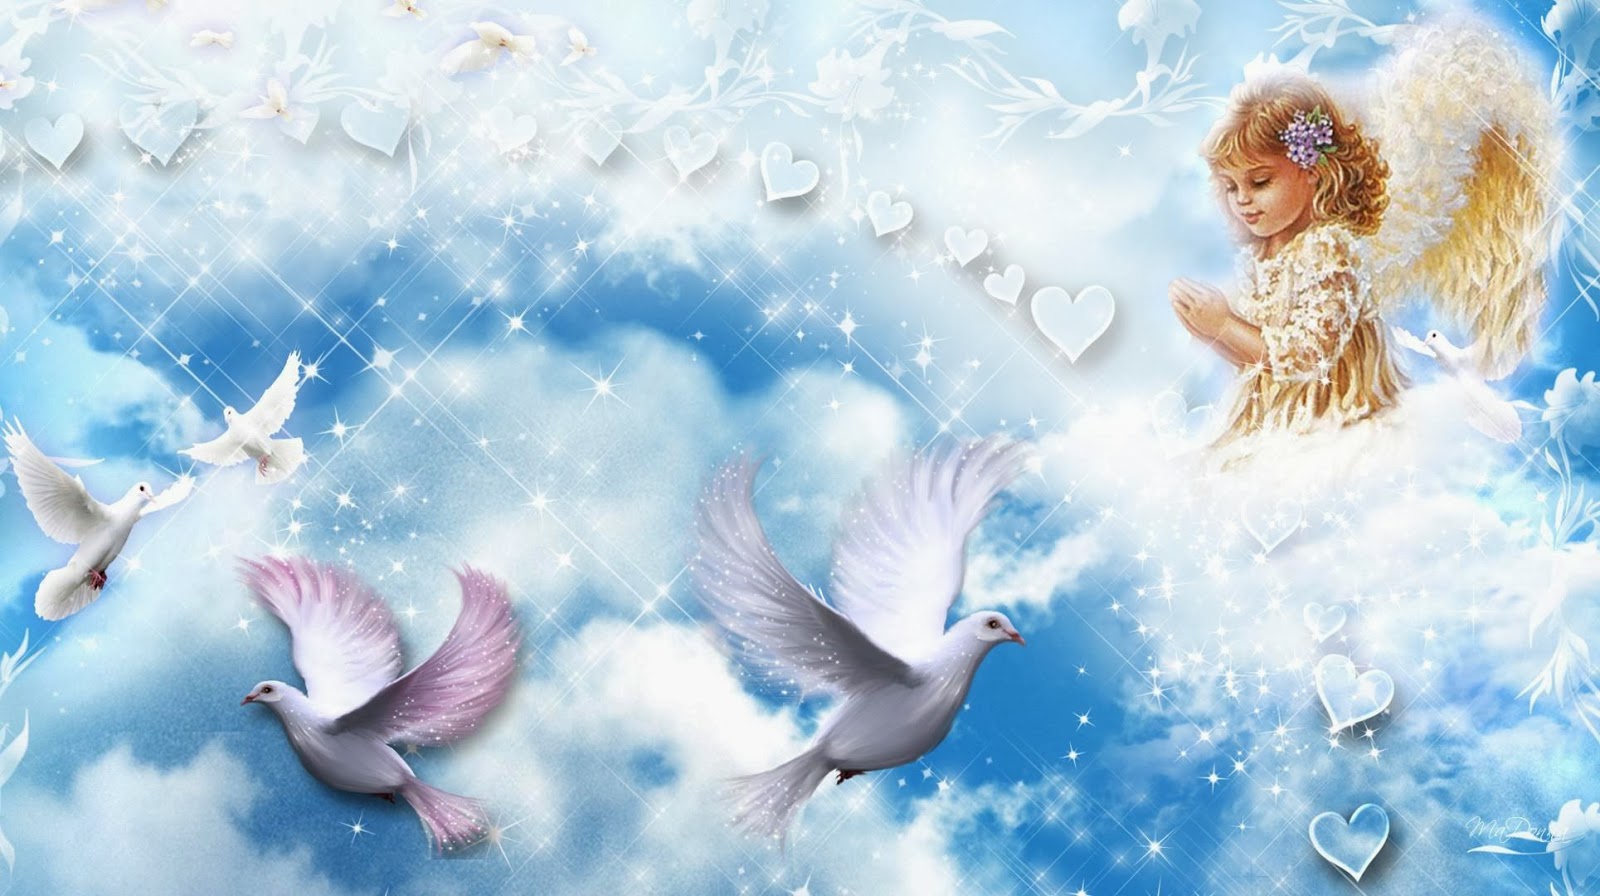 Angels And Doves Wallpaper High Definition For Desktop